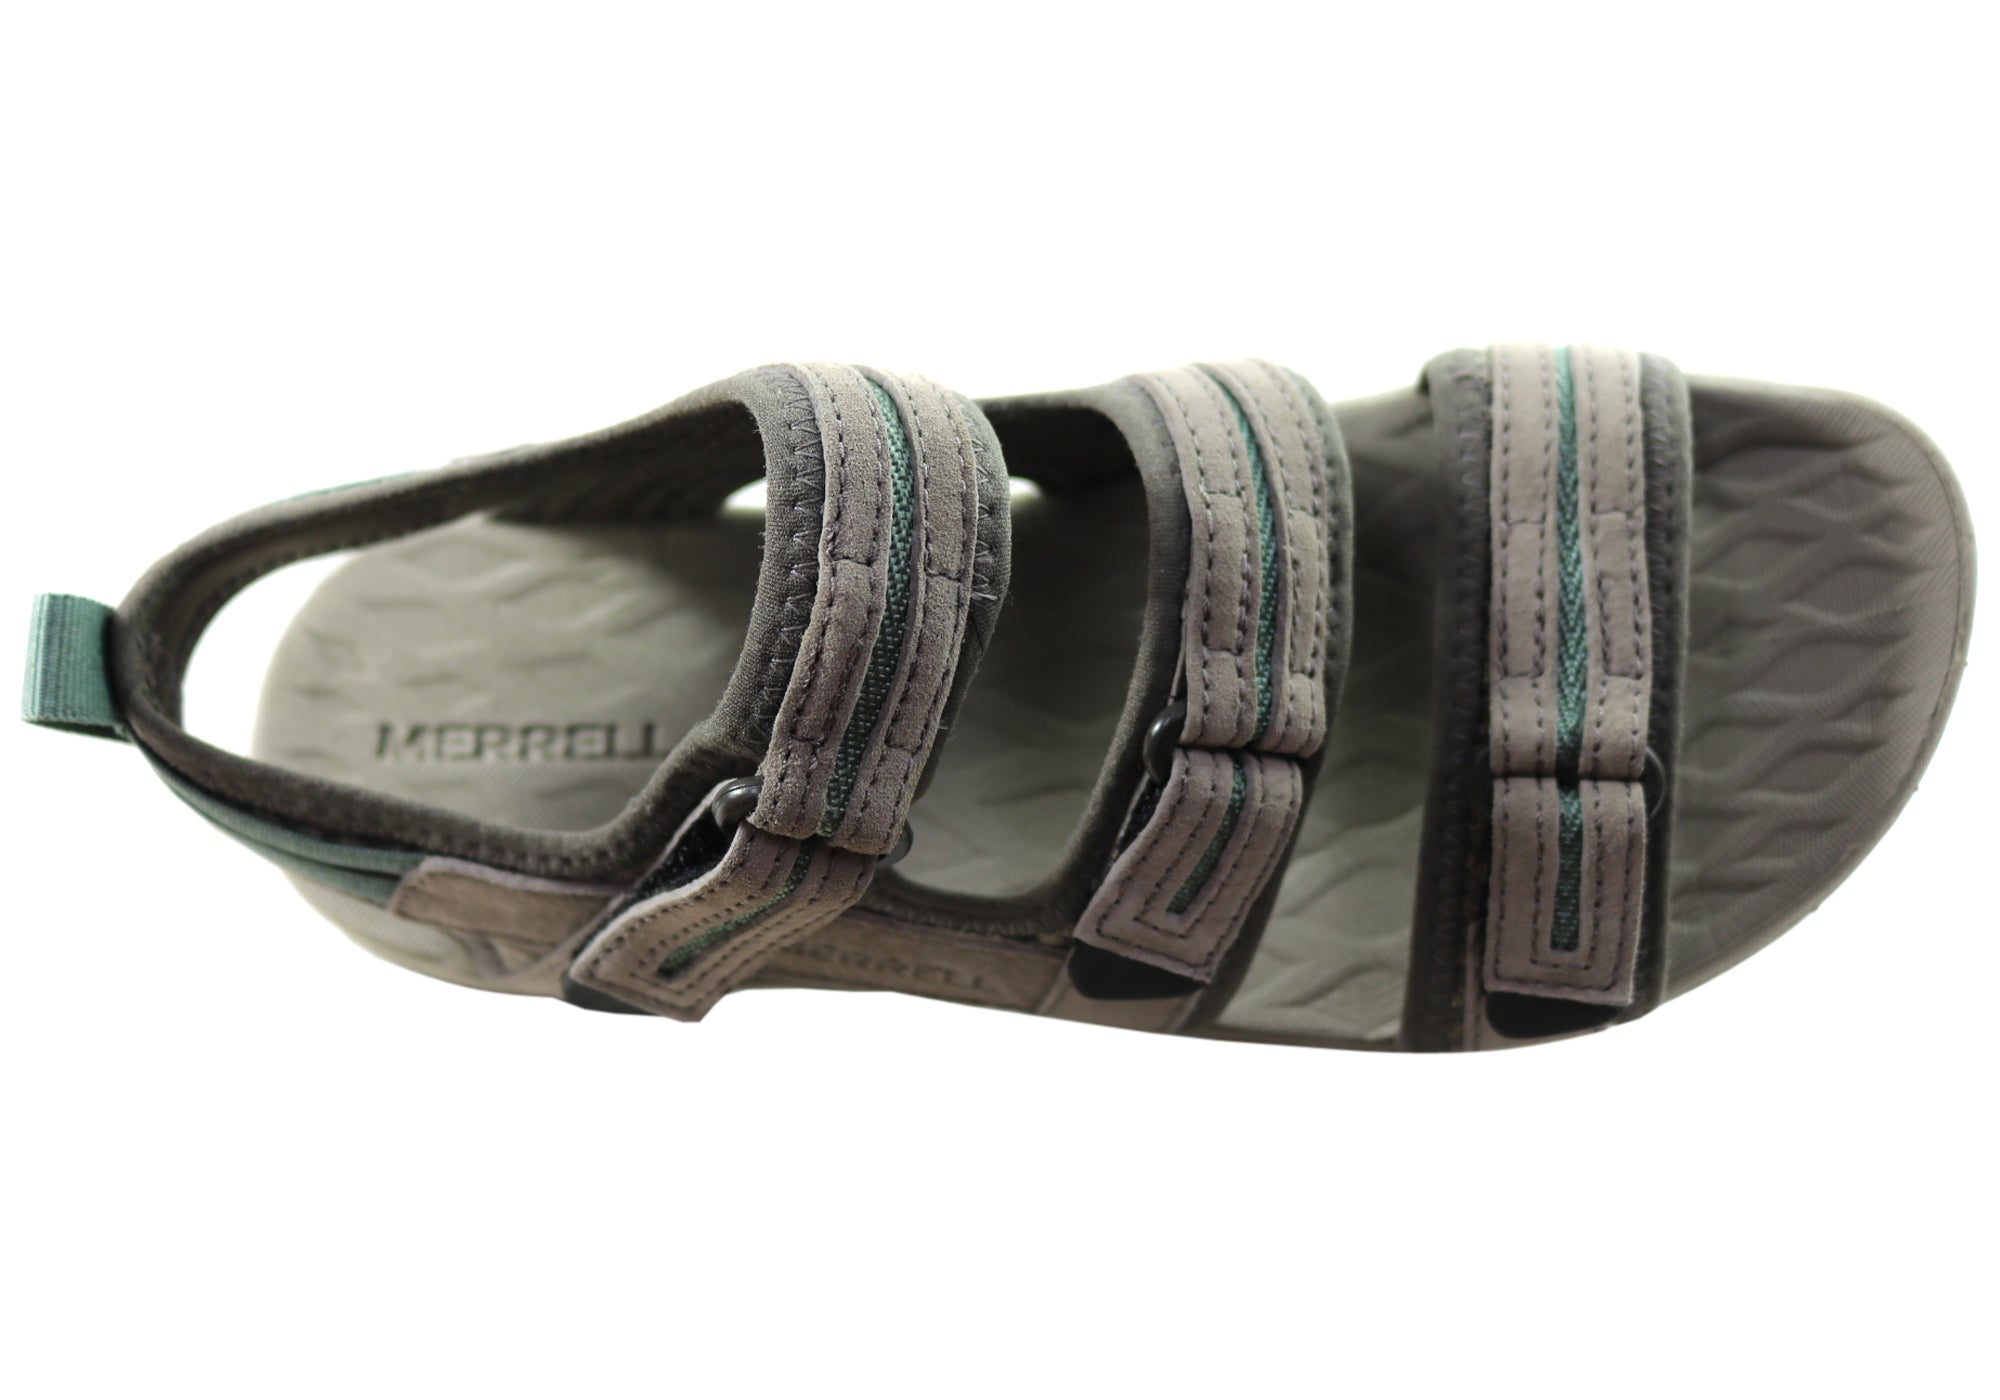 Merrell Womens Siren 2 Strap Comfortable Adjustable Sandals